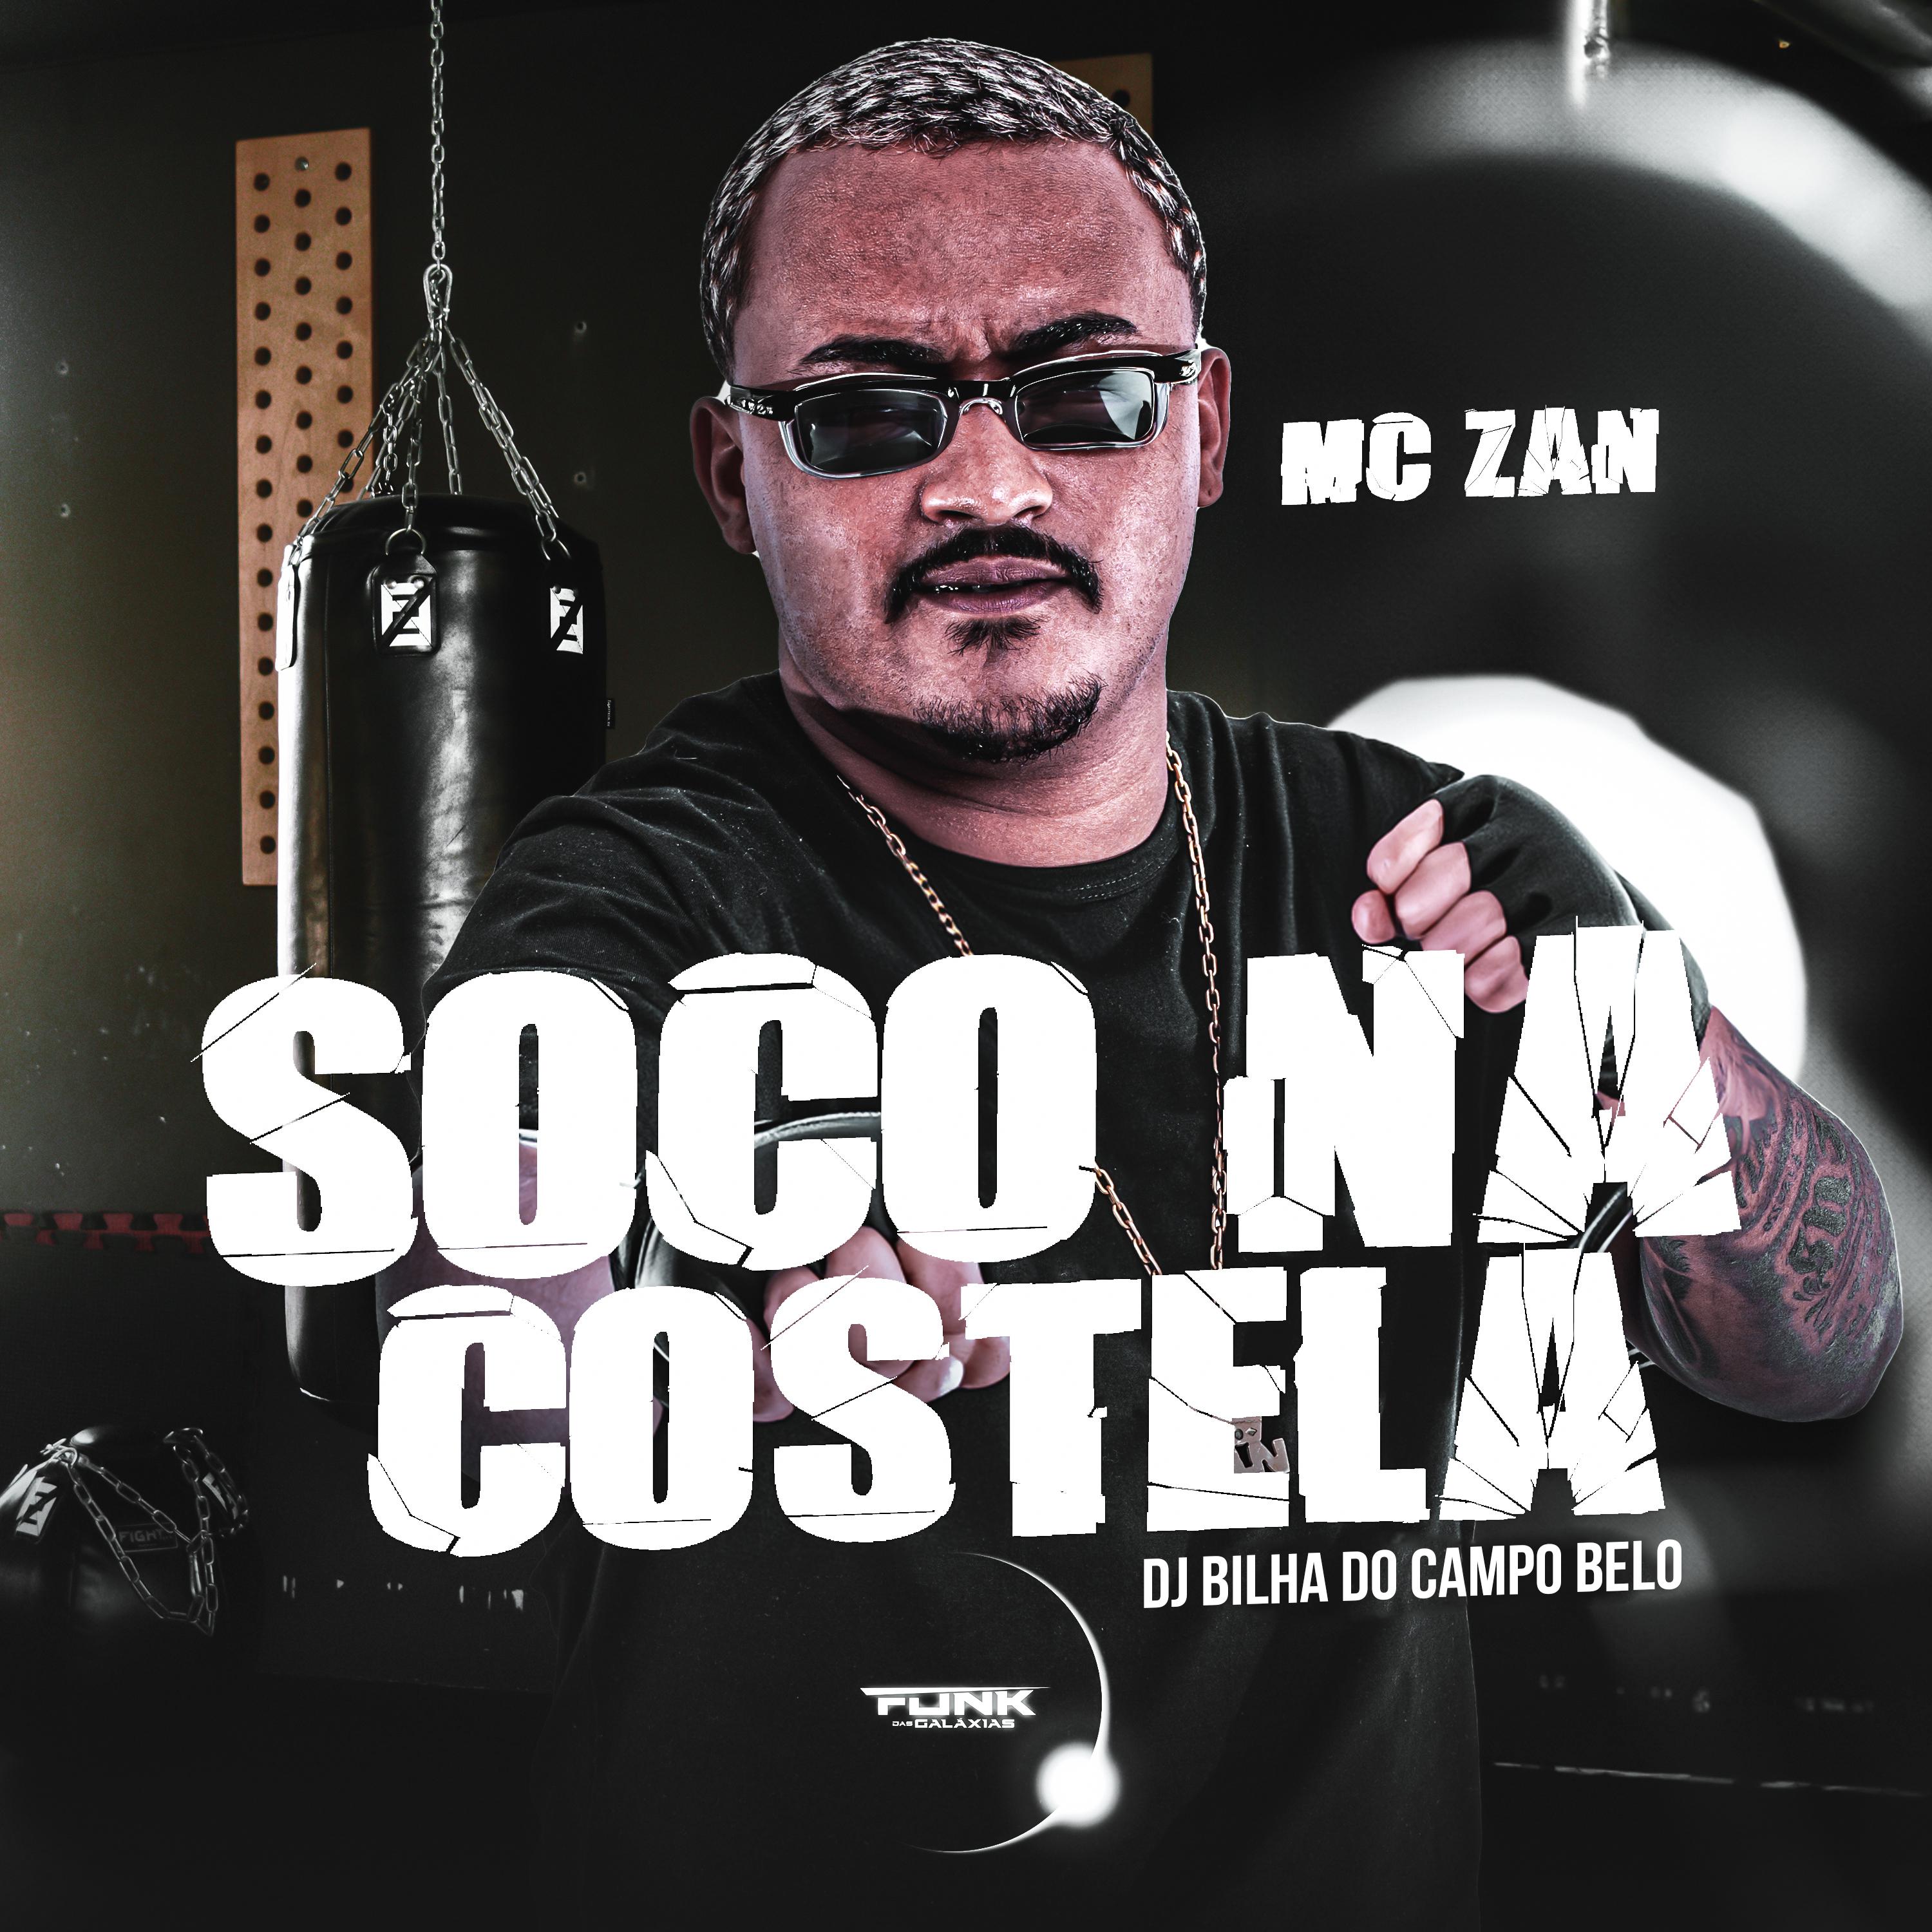 Постер альбома Soco na Costela